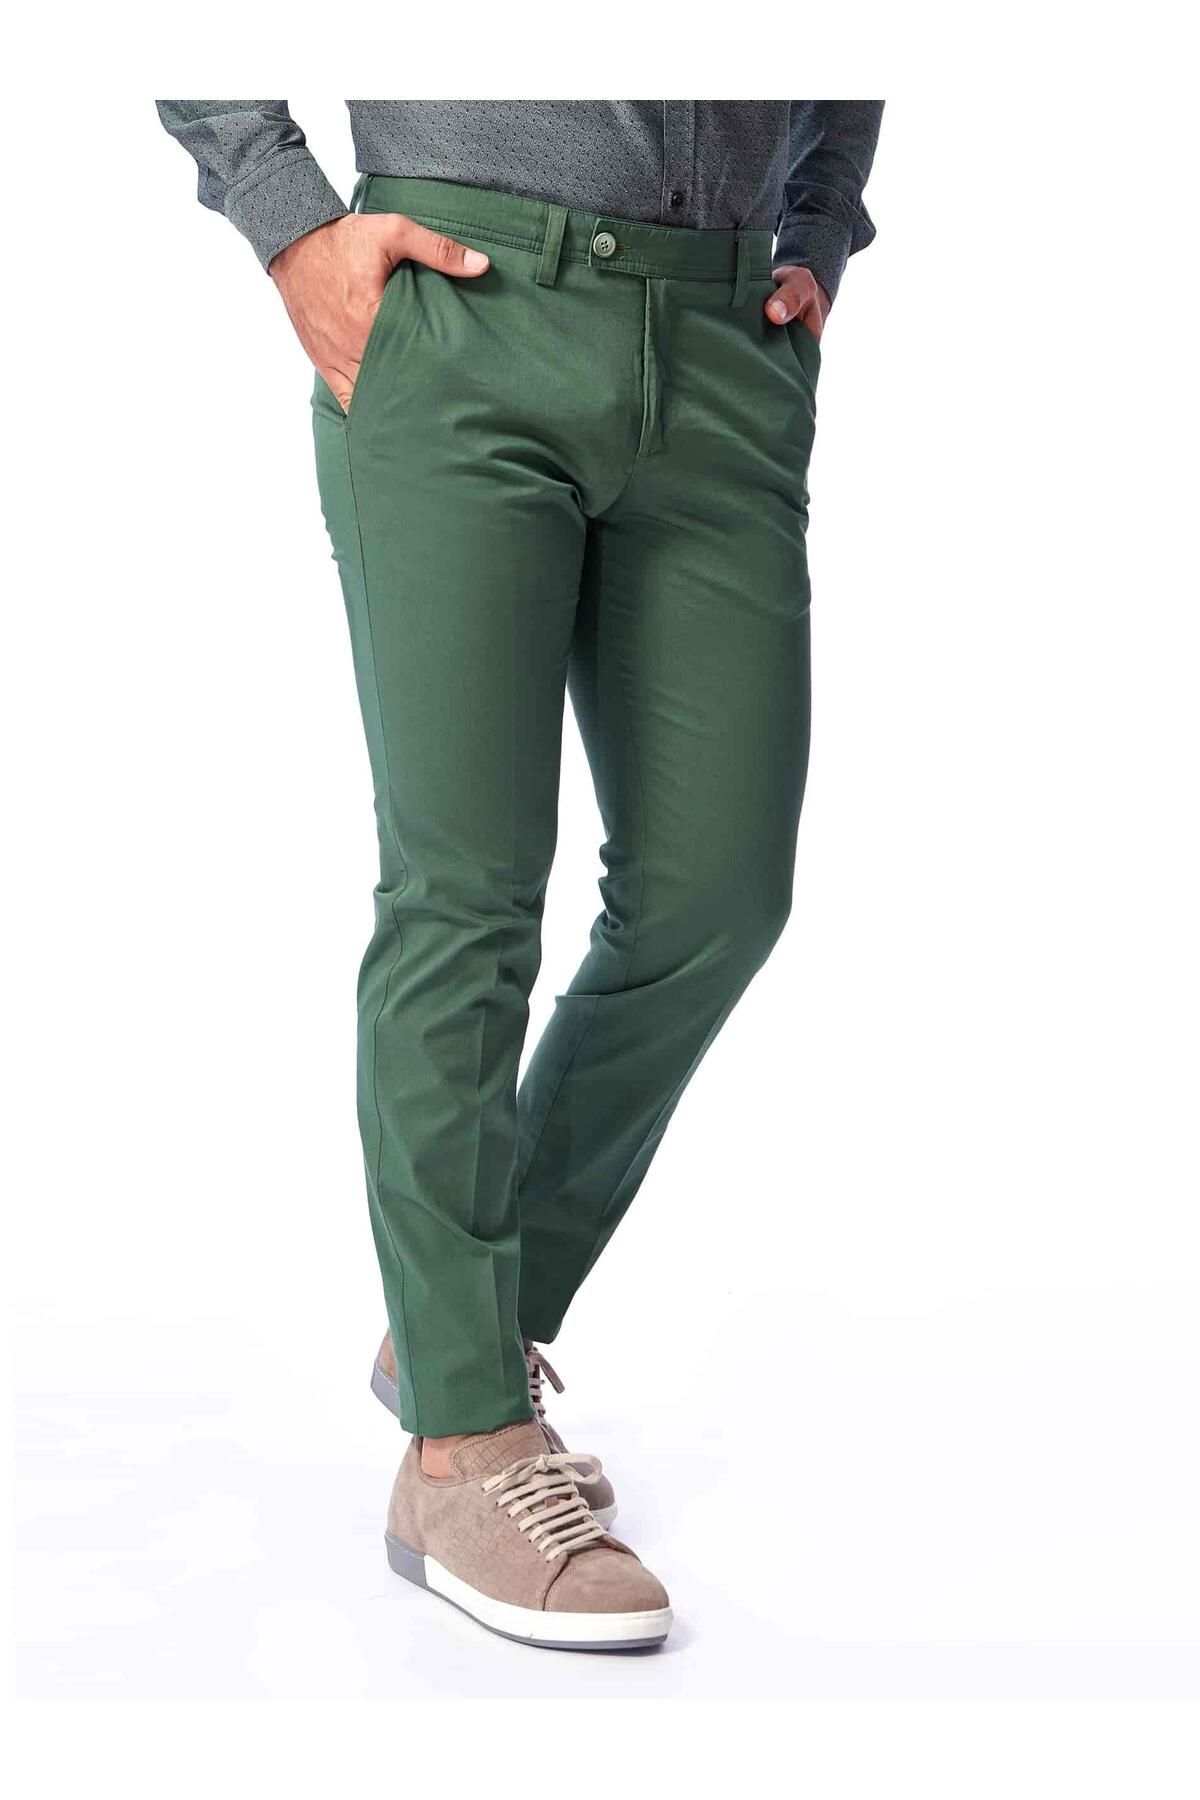 Dufy Yeşil Erkek Slim Fit Düz Kanvas Pantolon - 38770